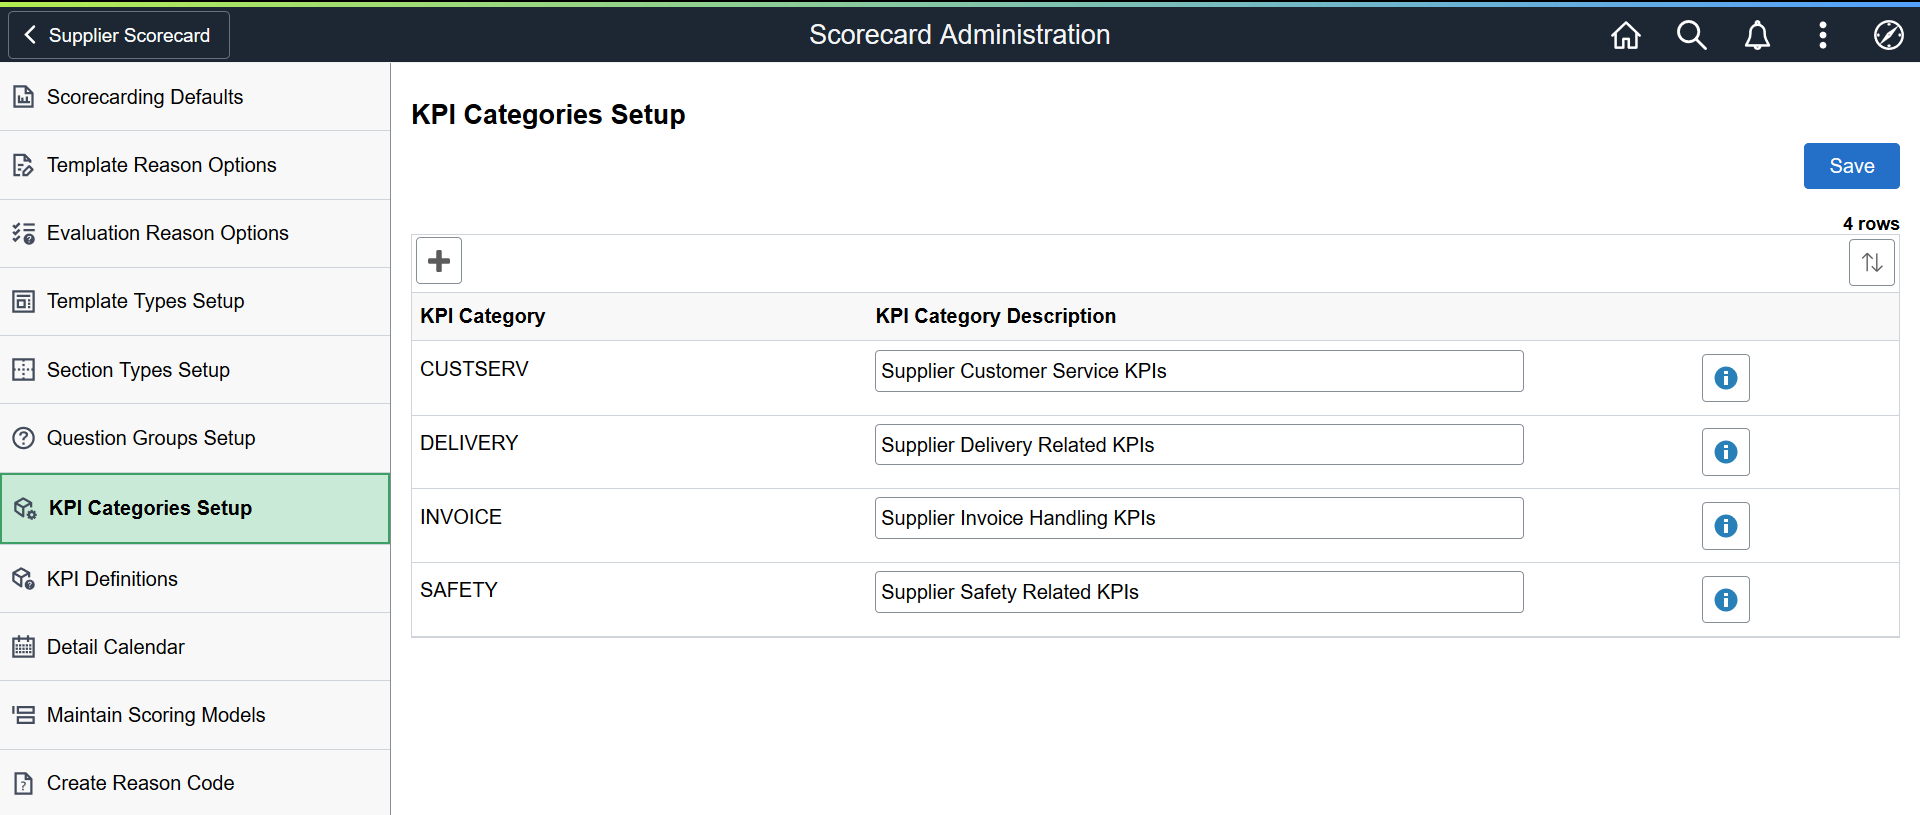 KPI Categories Setup page